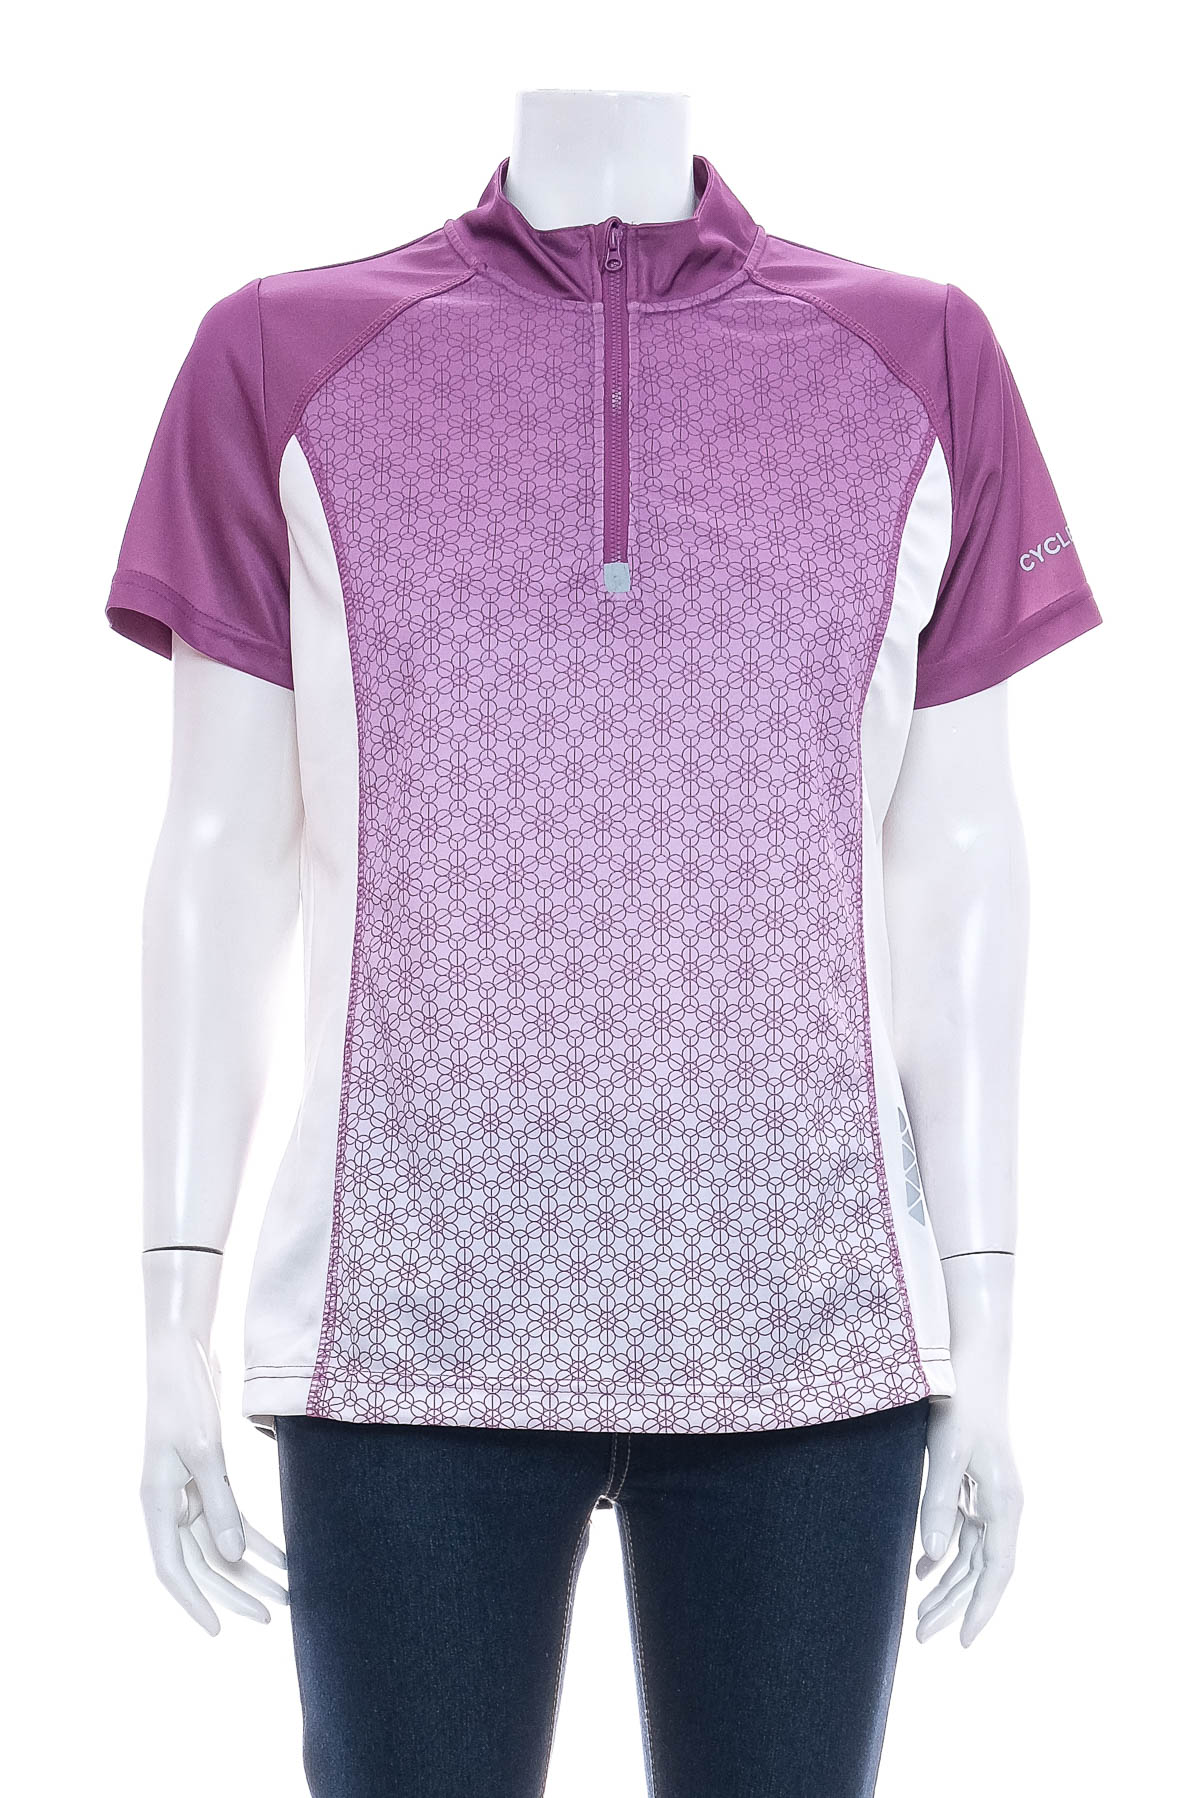 Women's t-shirt for cycling - Crivit - 0